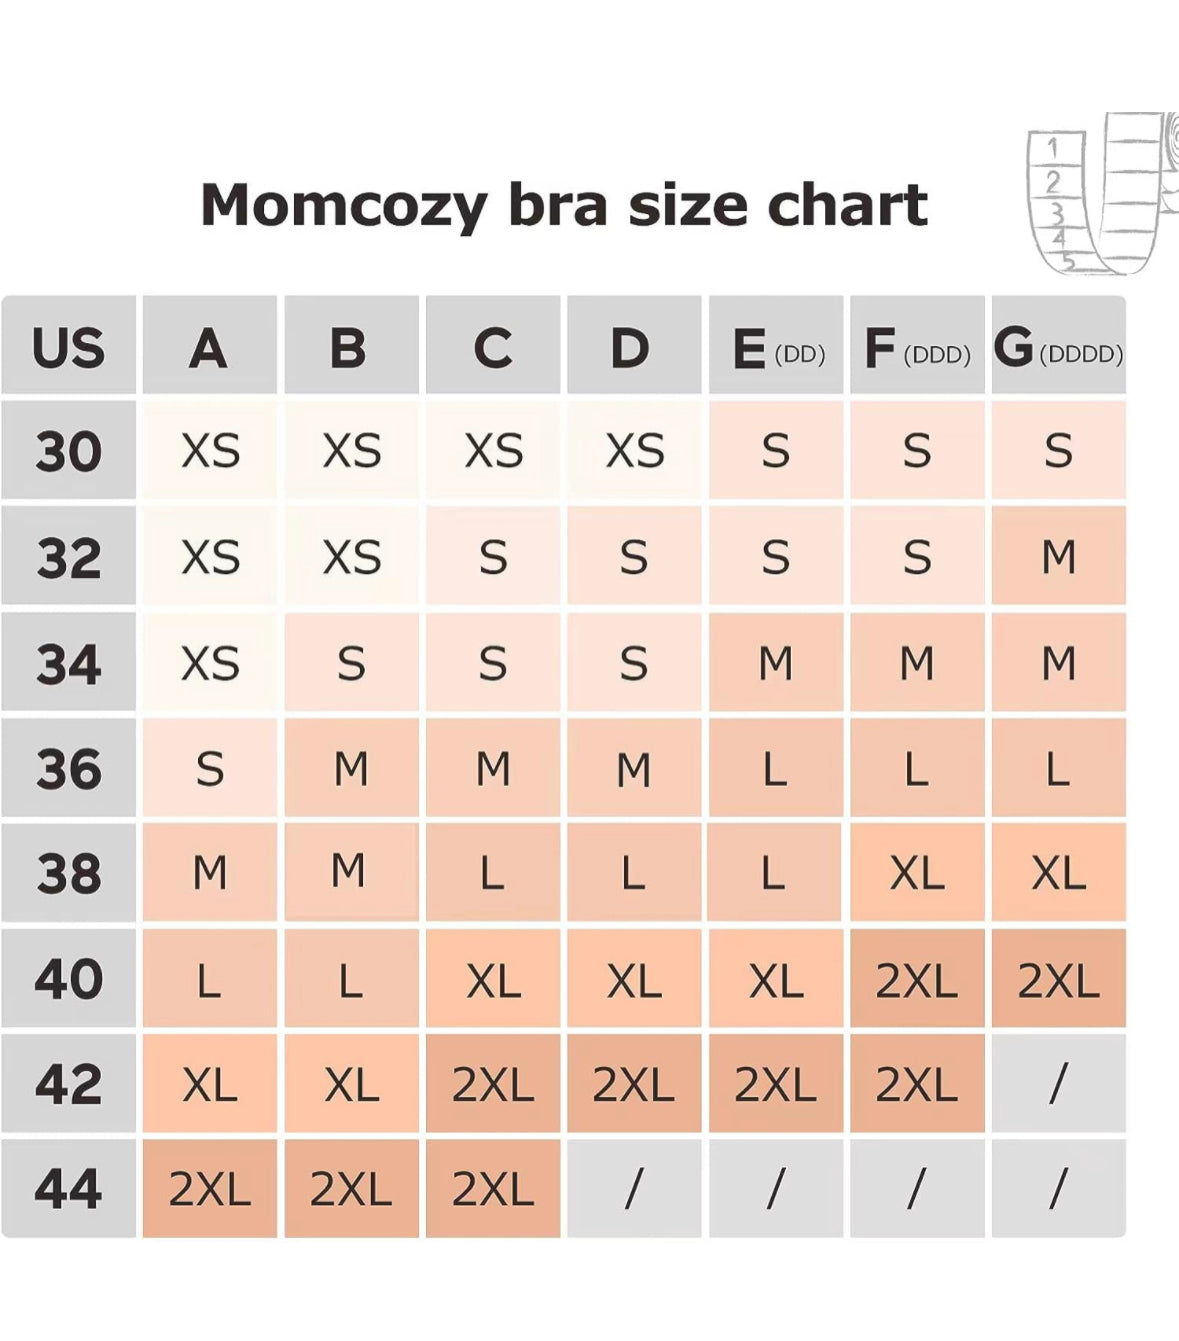 Adjustable Breast-Pumping and Breastfeeding Bra by Momcozy - Beige.